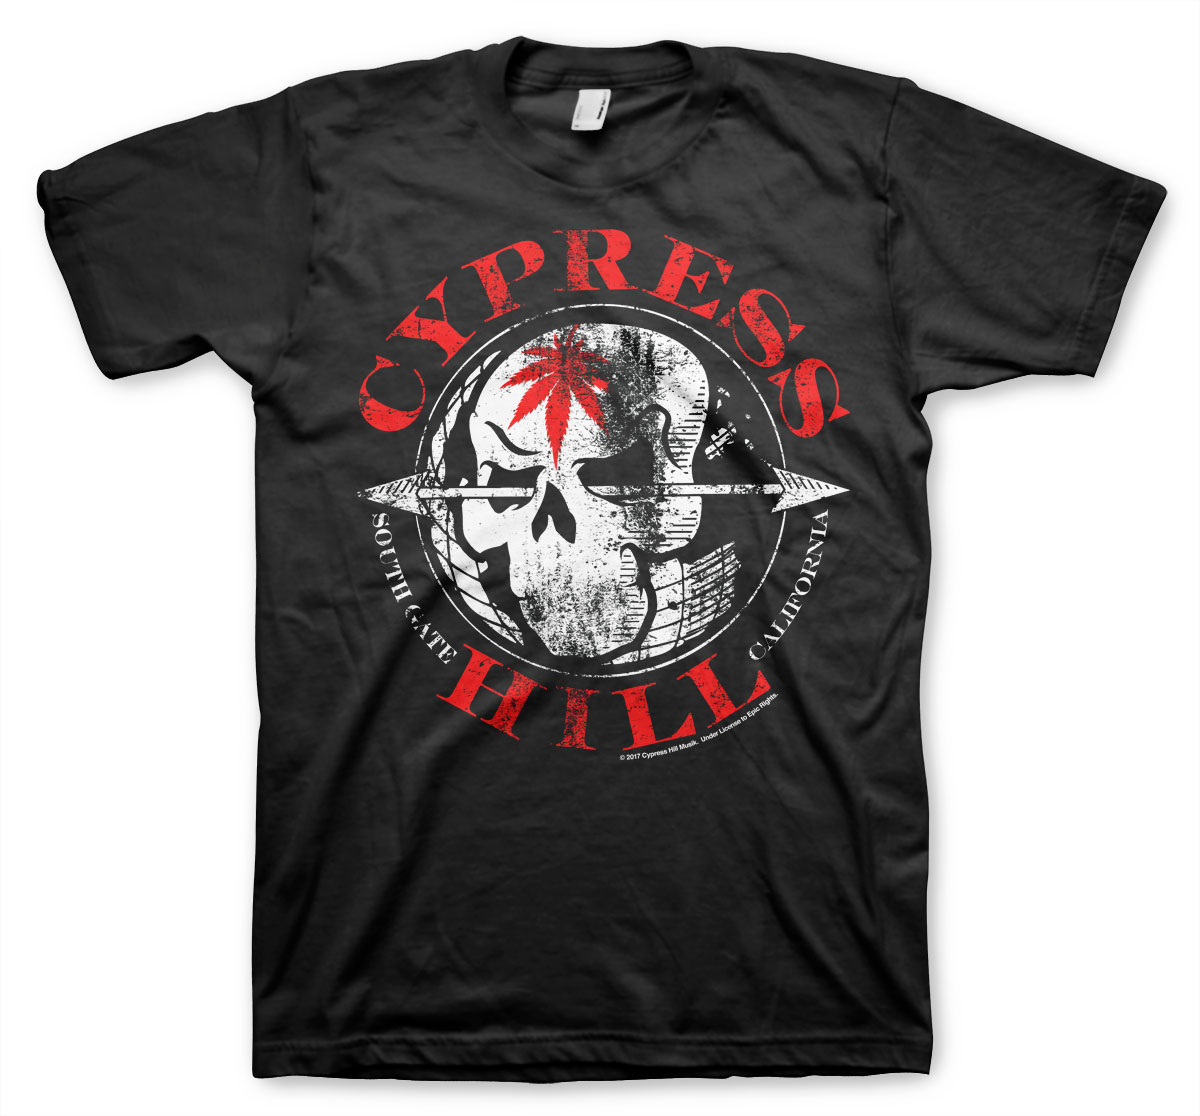 CYPRESS HILL: South Gate California T-Shirt (Black)